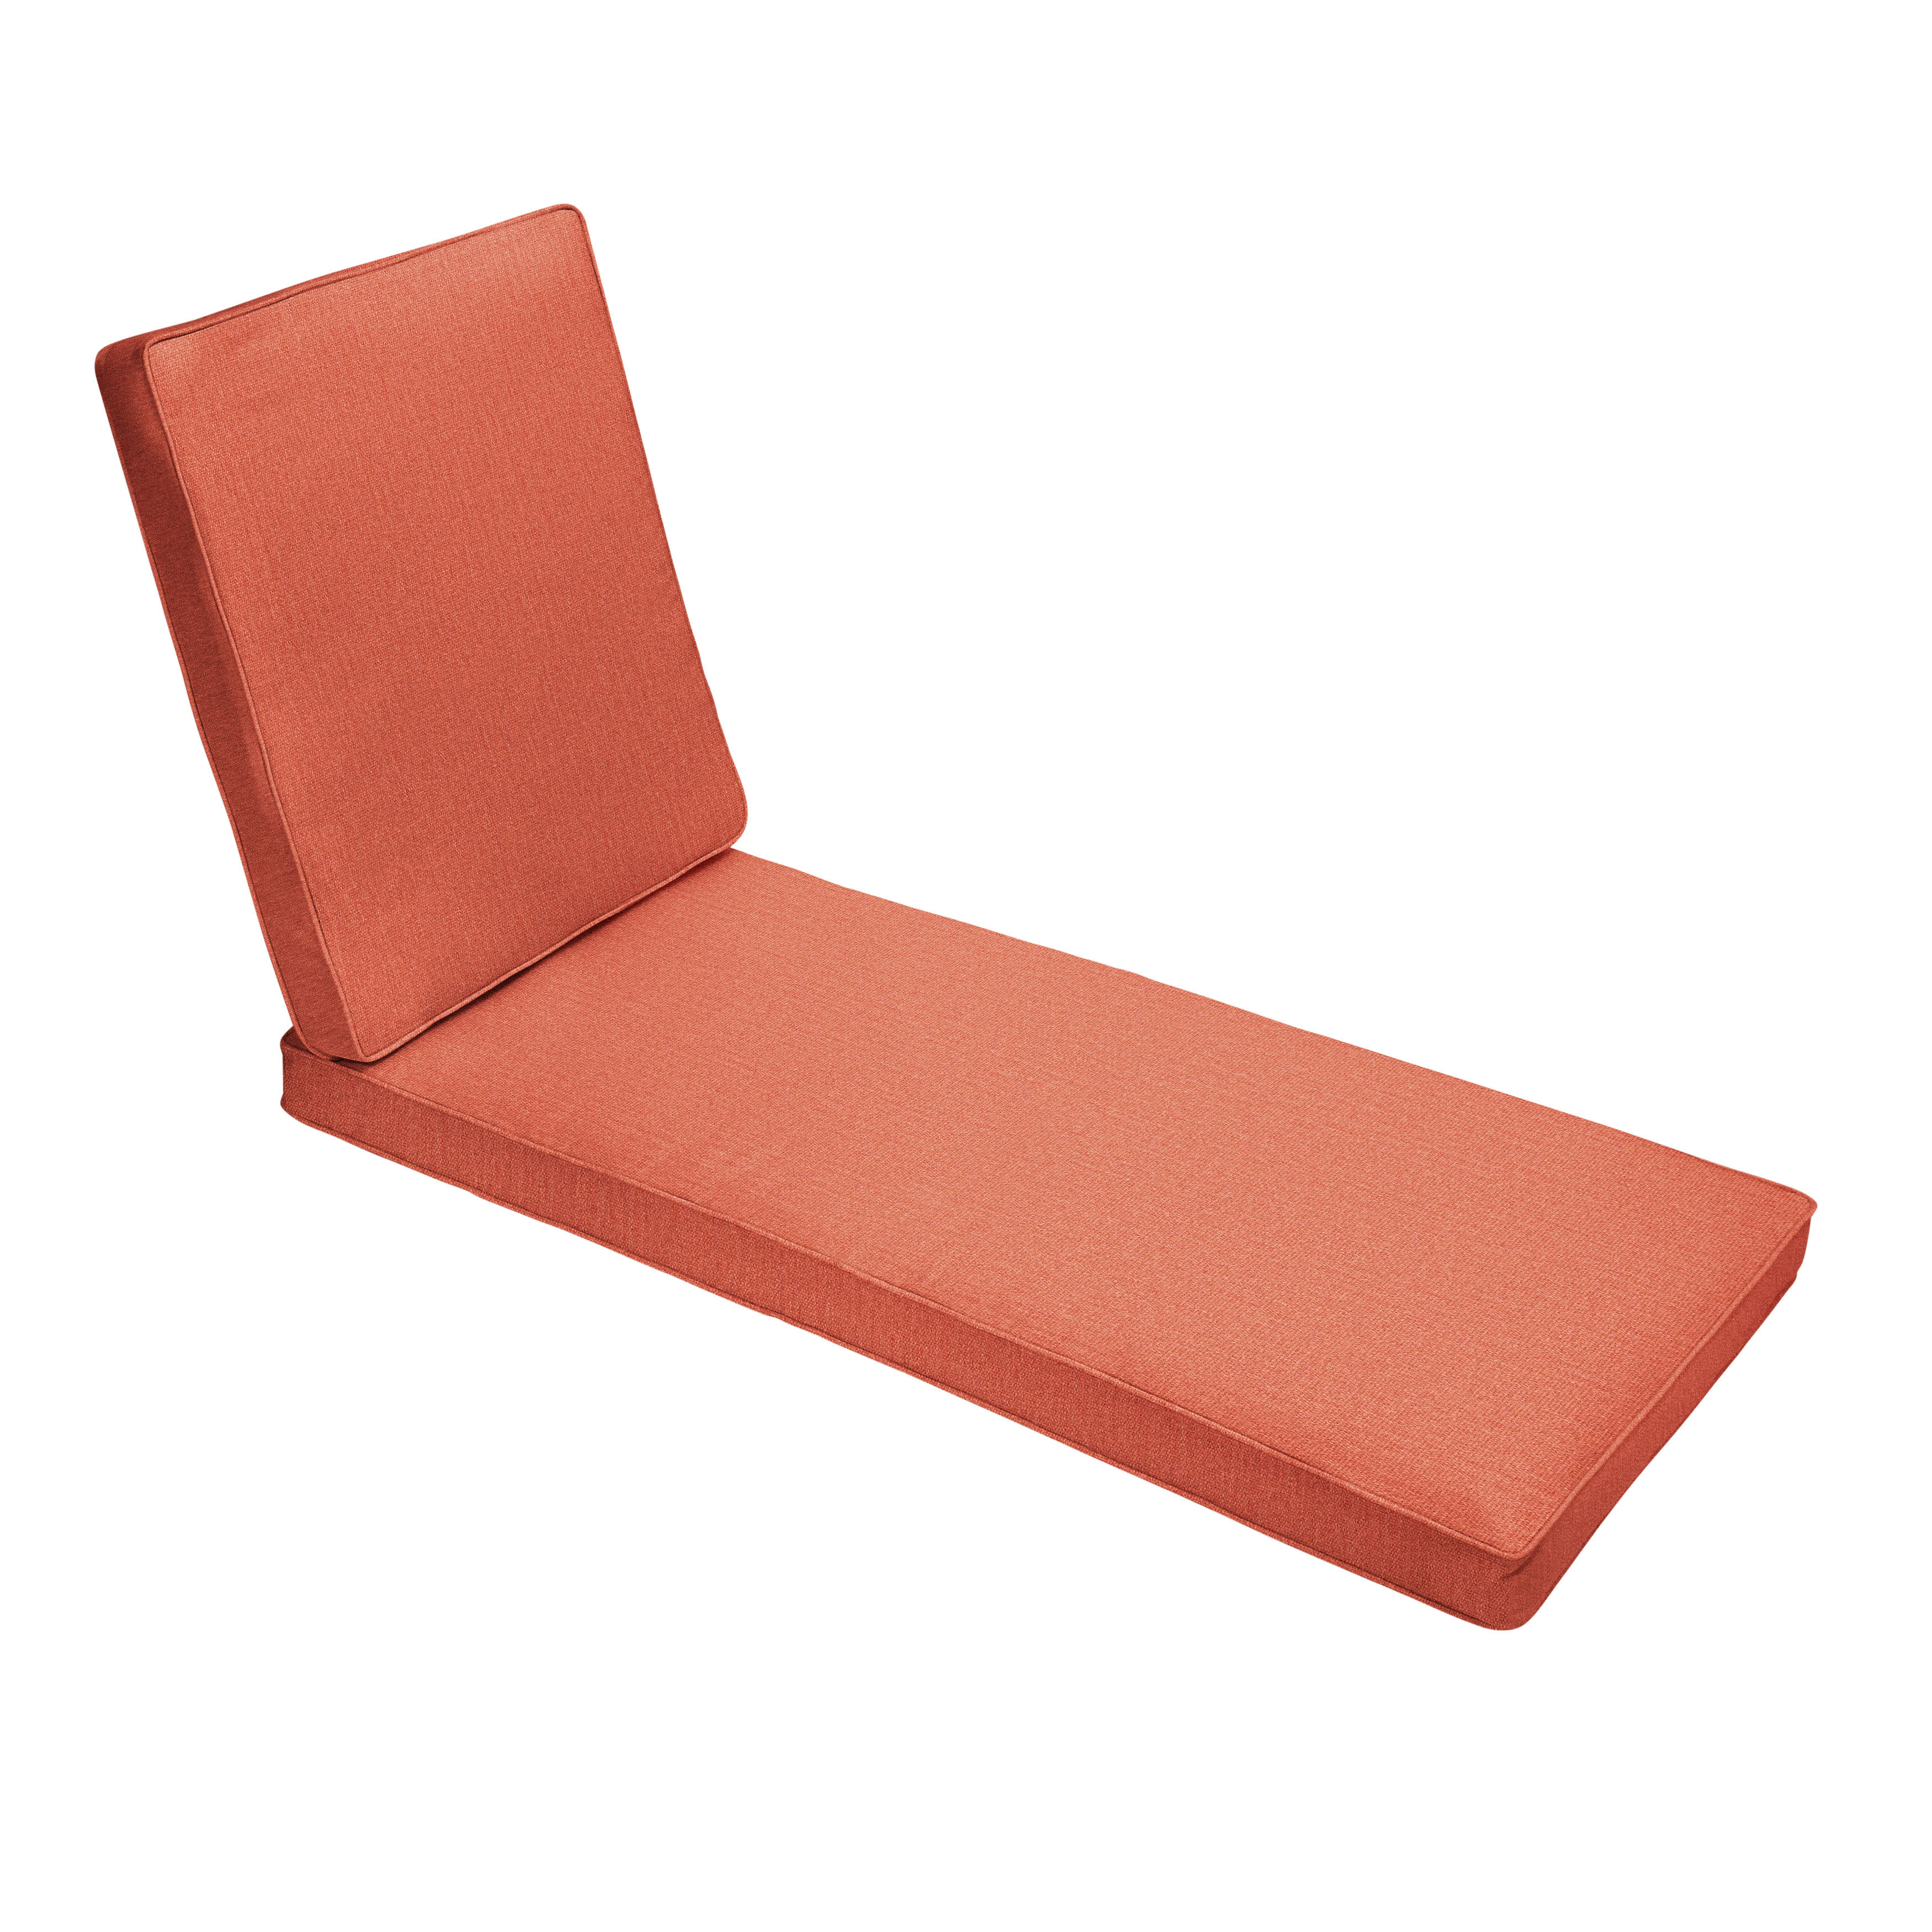 Sunbrella Outdoor Folding Chair cushion